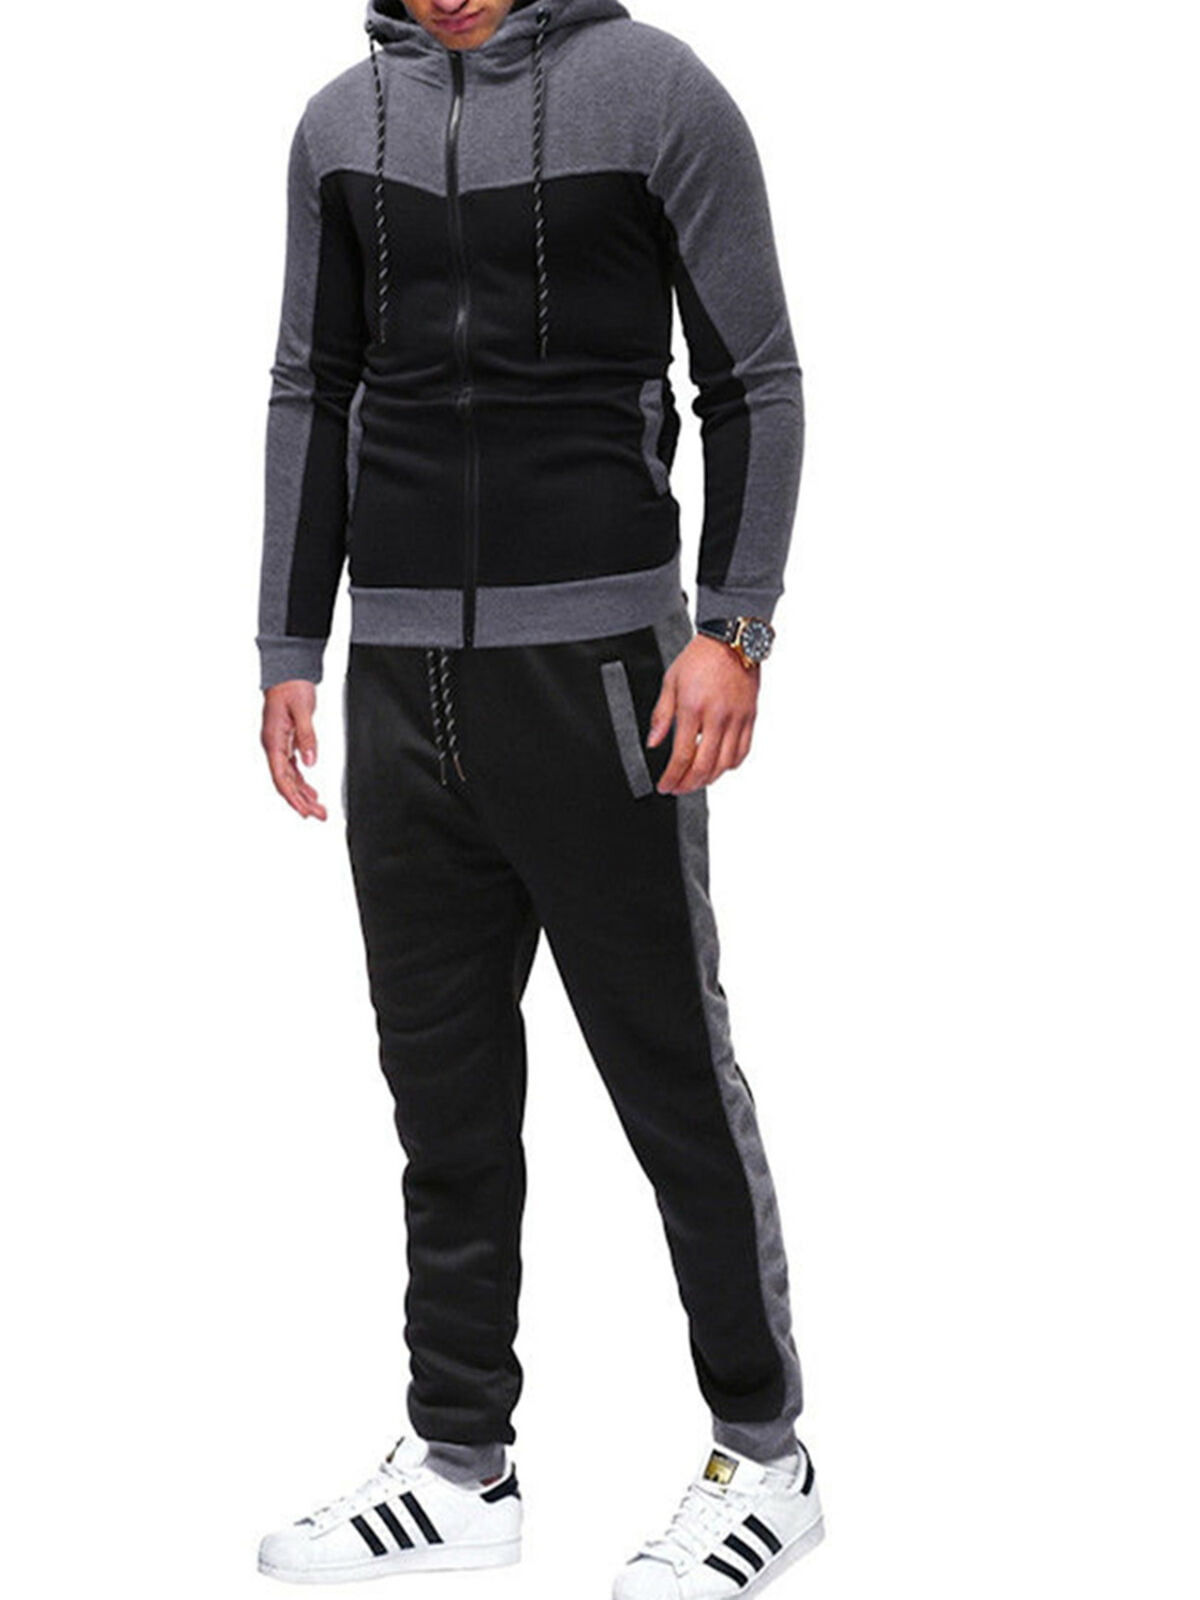 Mens Full Zip Tracksuit Set Jogging Sweatsuit Activewear Hoodie Pants Sets Fall Winter Clothes 